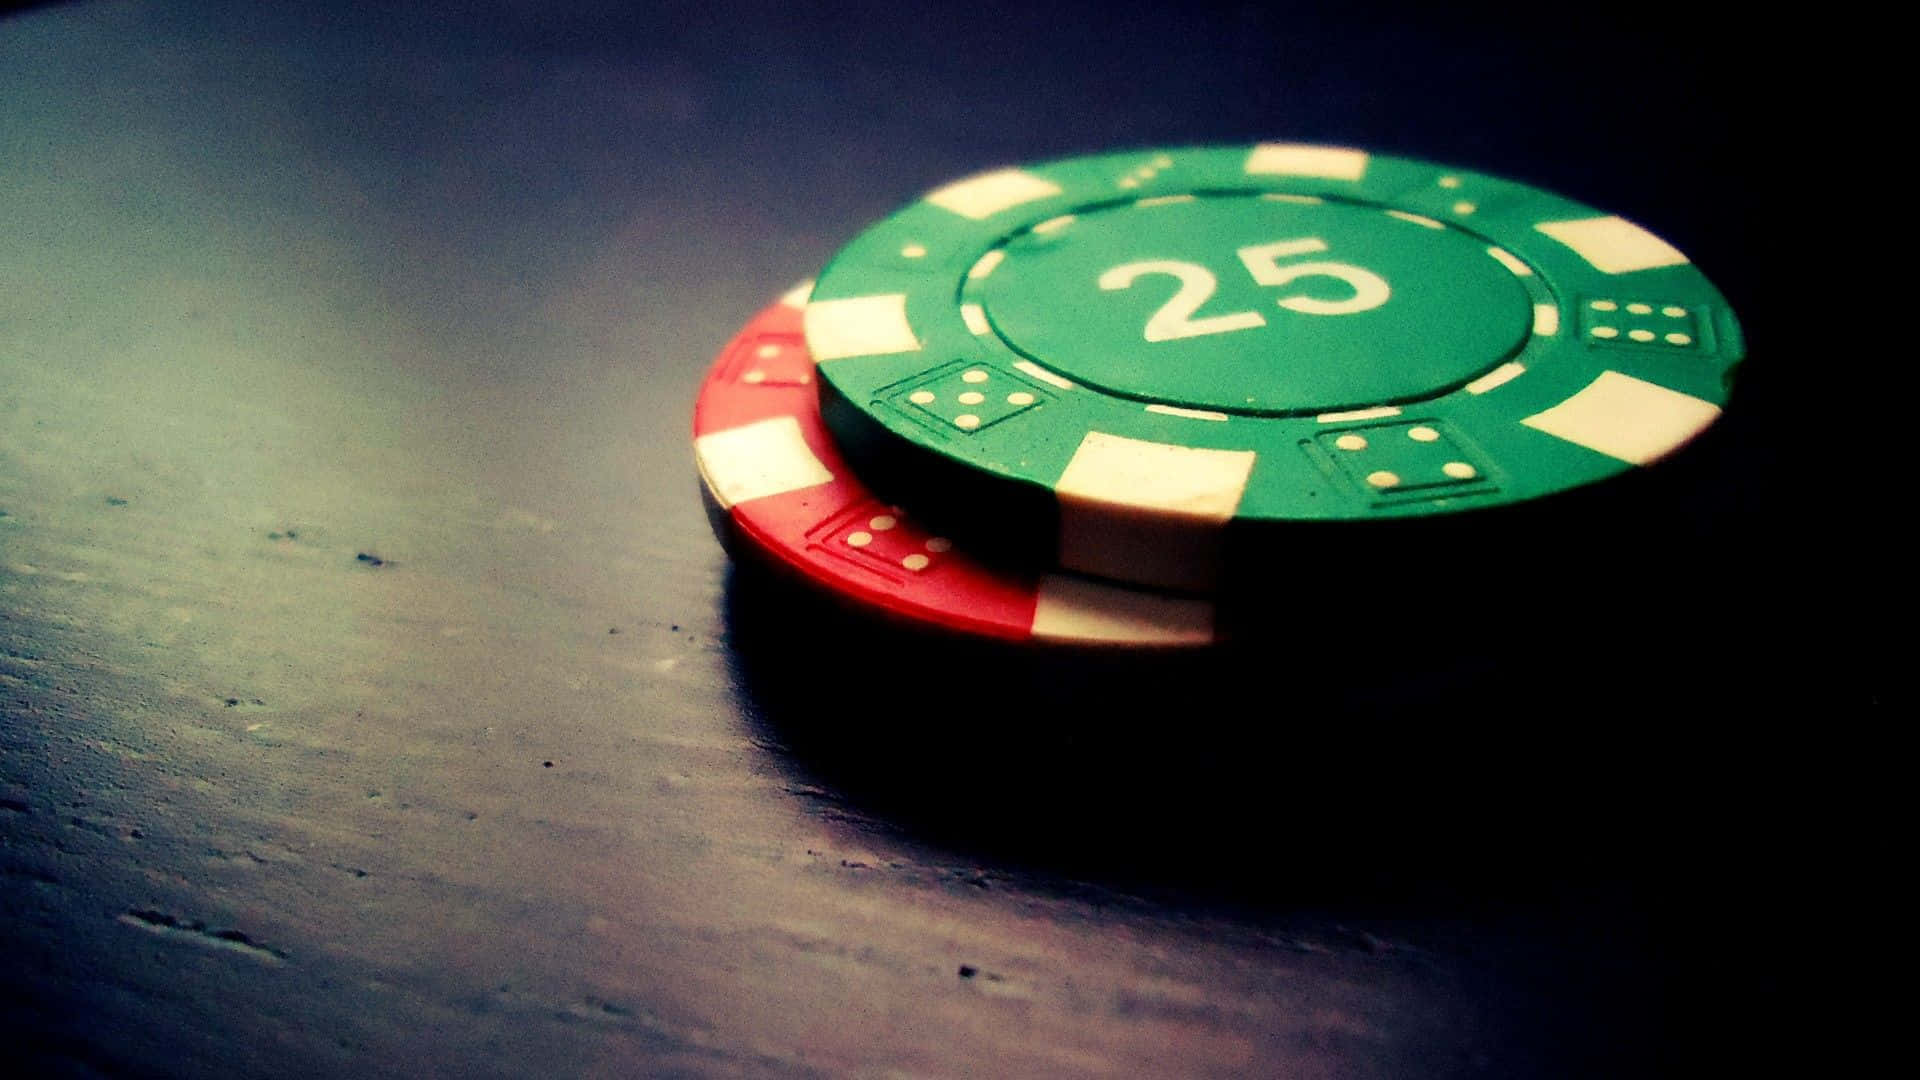 : Don't Bluff - Sharpen Your Poker Skills!